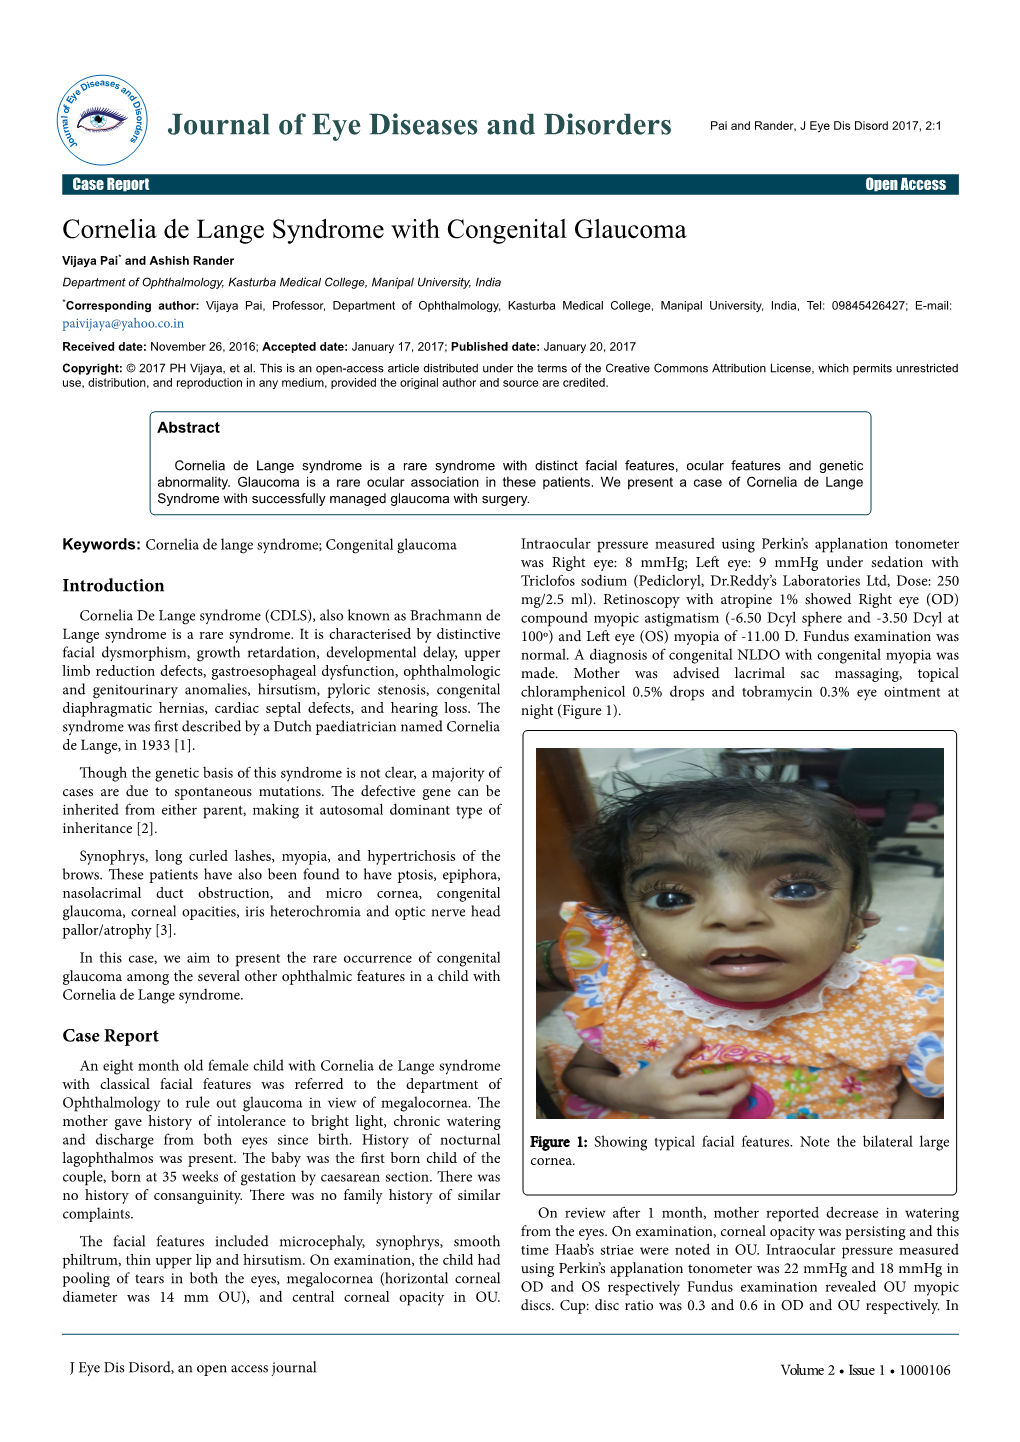 Cornelia De Lange Syndrome with Congenital Glaucoma